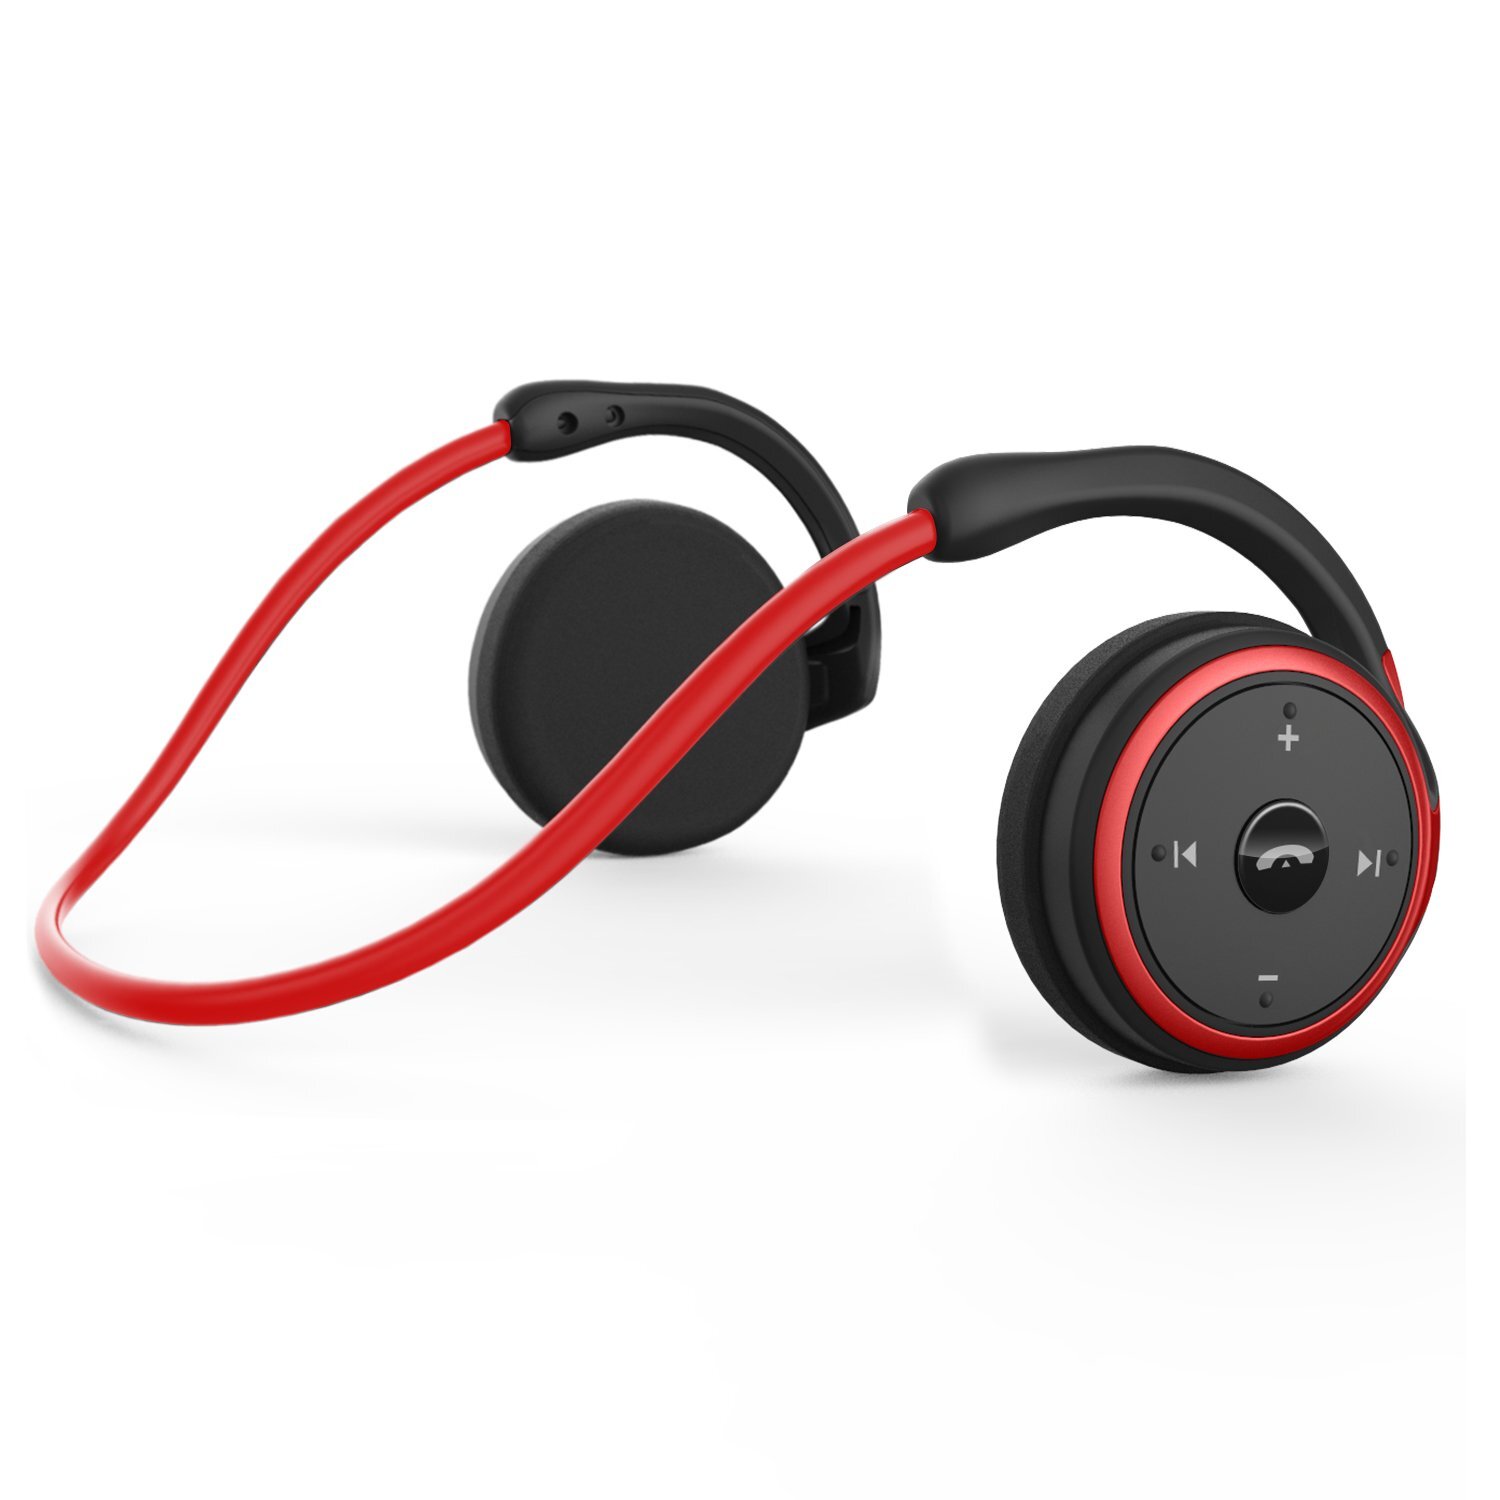 Наушники Sport Wireless Headset Earphone 4.2. Wireless Bluetooth stereo Headset CSR4.2. Беспроводные наушники блютуз 4.2. Наушники x5 BT 5.0 Comfy Fit. Наушники для фонка